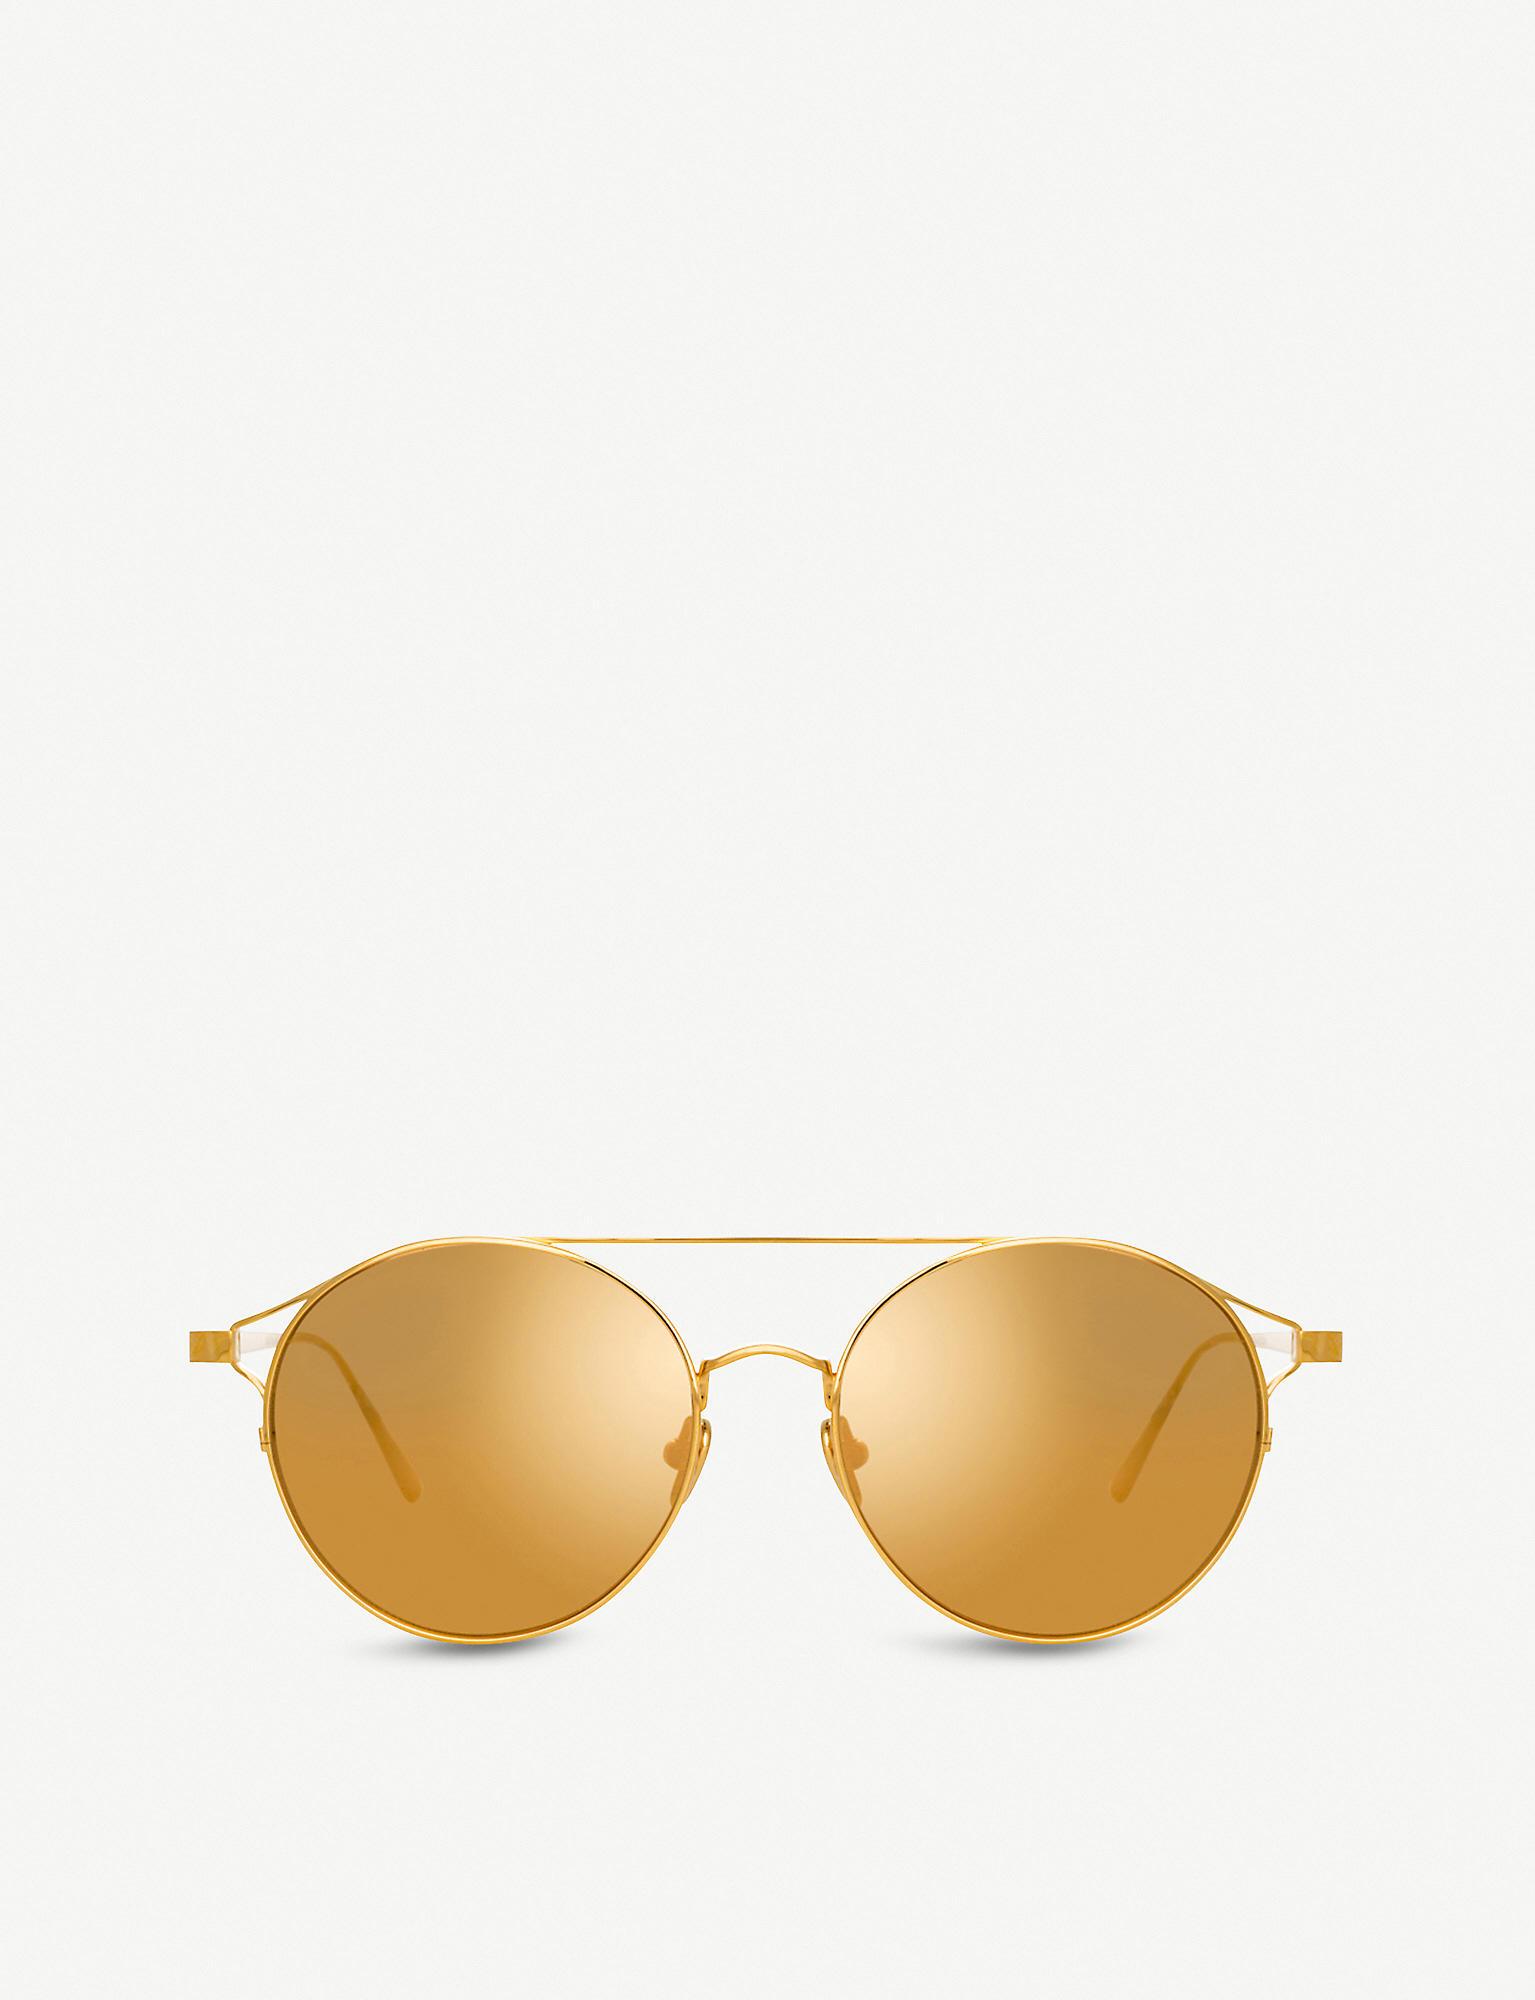 Linda Farrow 426 C1 Gold Plated Aviator Sunglasses In Metallic Lyst 